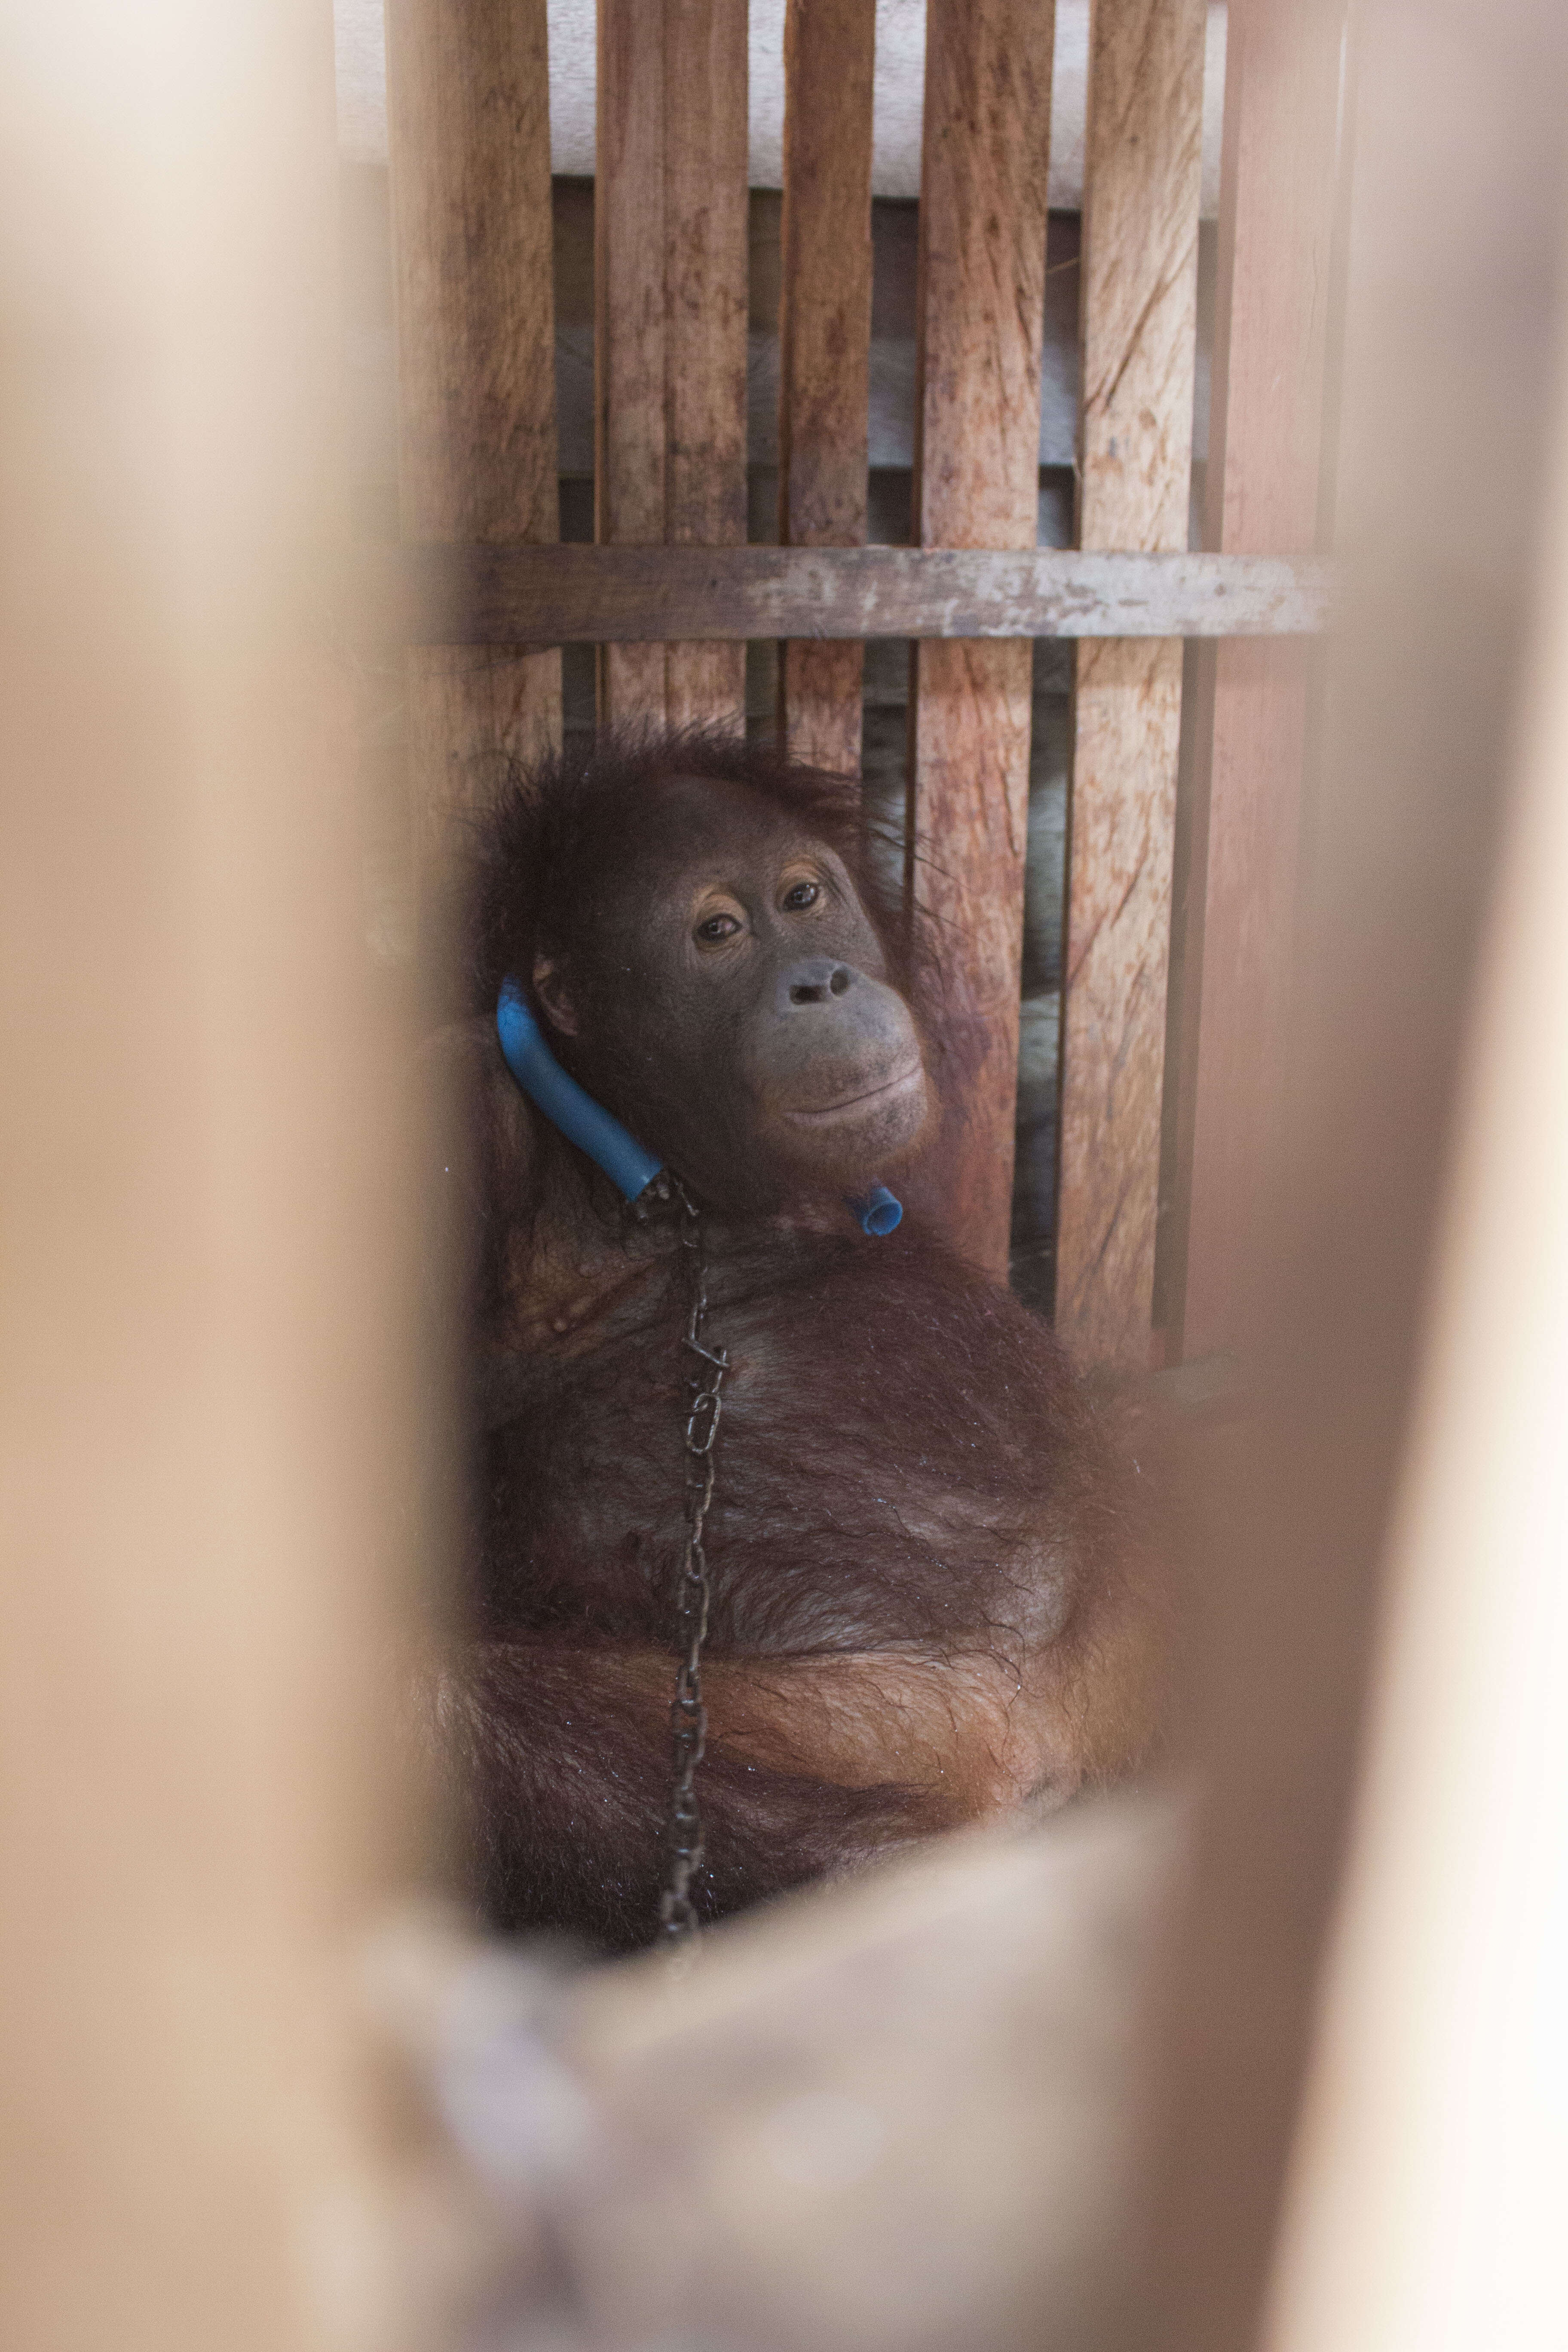 Bornean orangutan locked up inside a crate in Indonesia